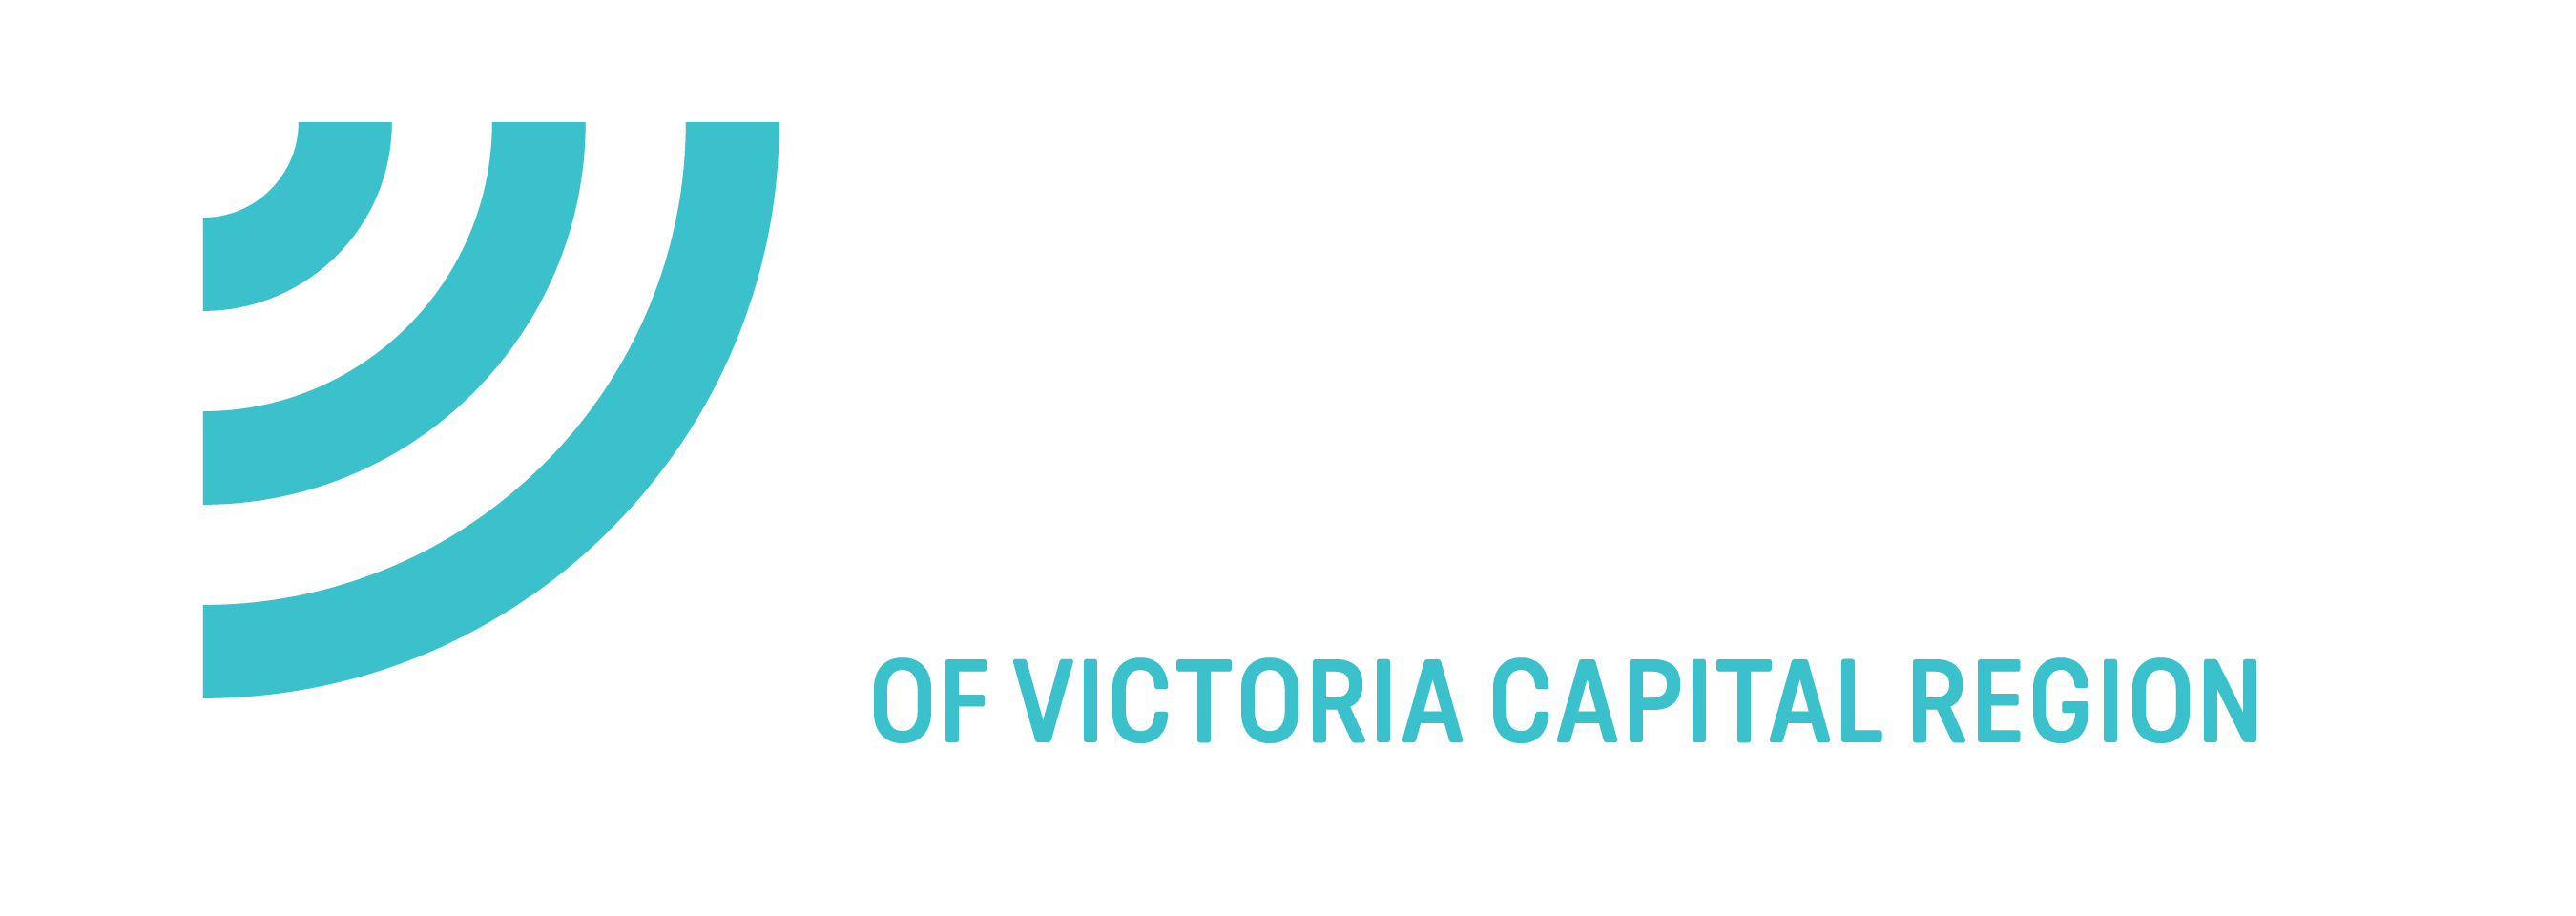 Match Support Framework: Developmental Relationships Mentee Survey - Big Brothers Big Sisters of Victoria Capital Region